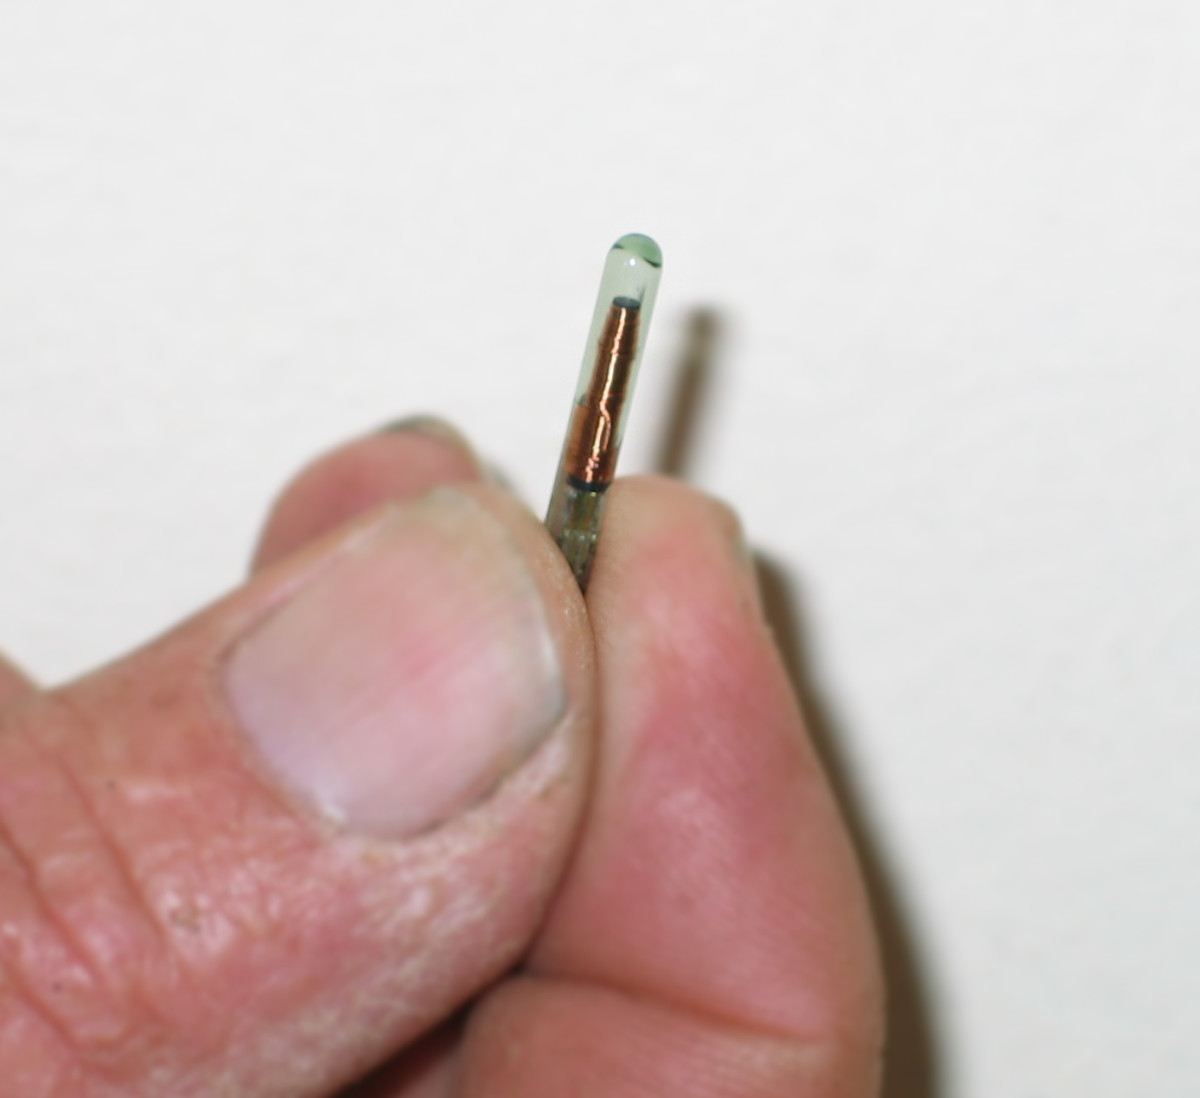 An implantable RFID chip.